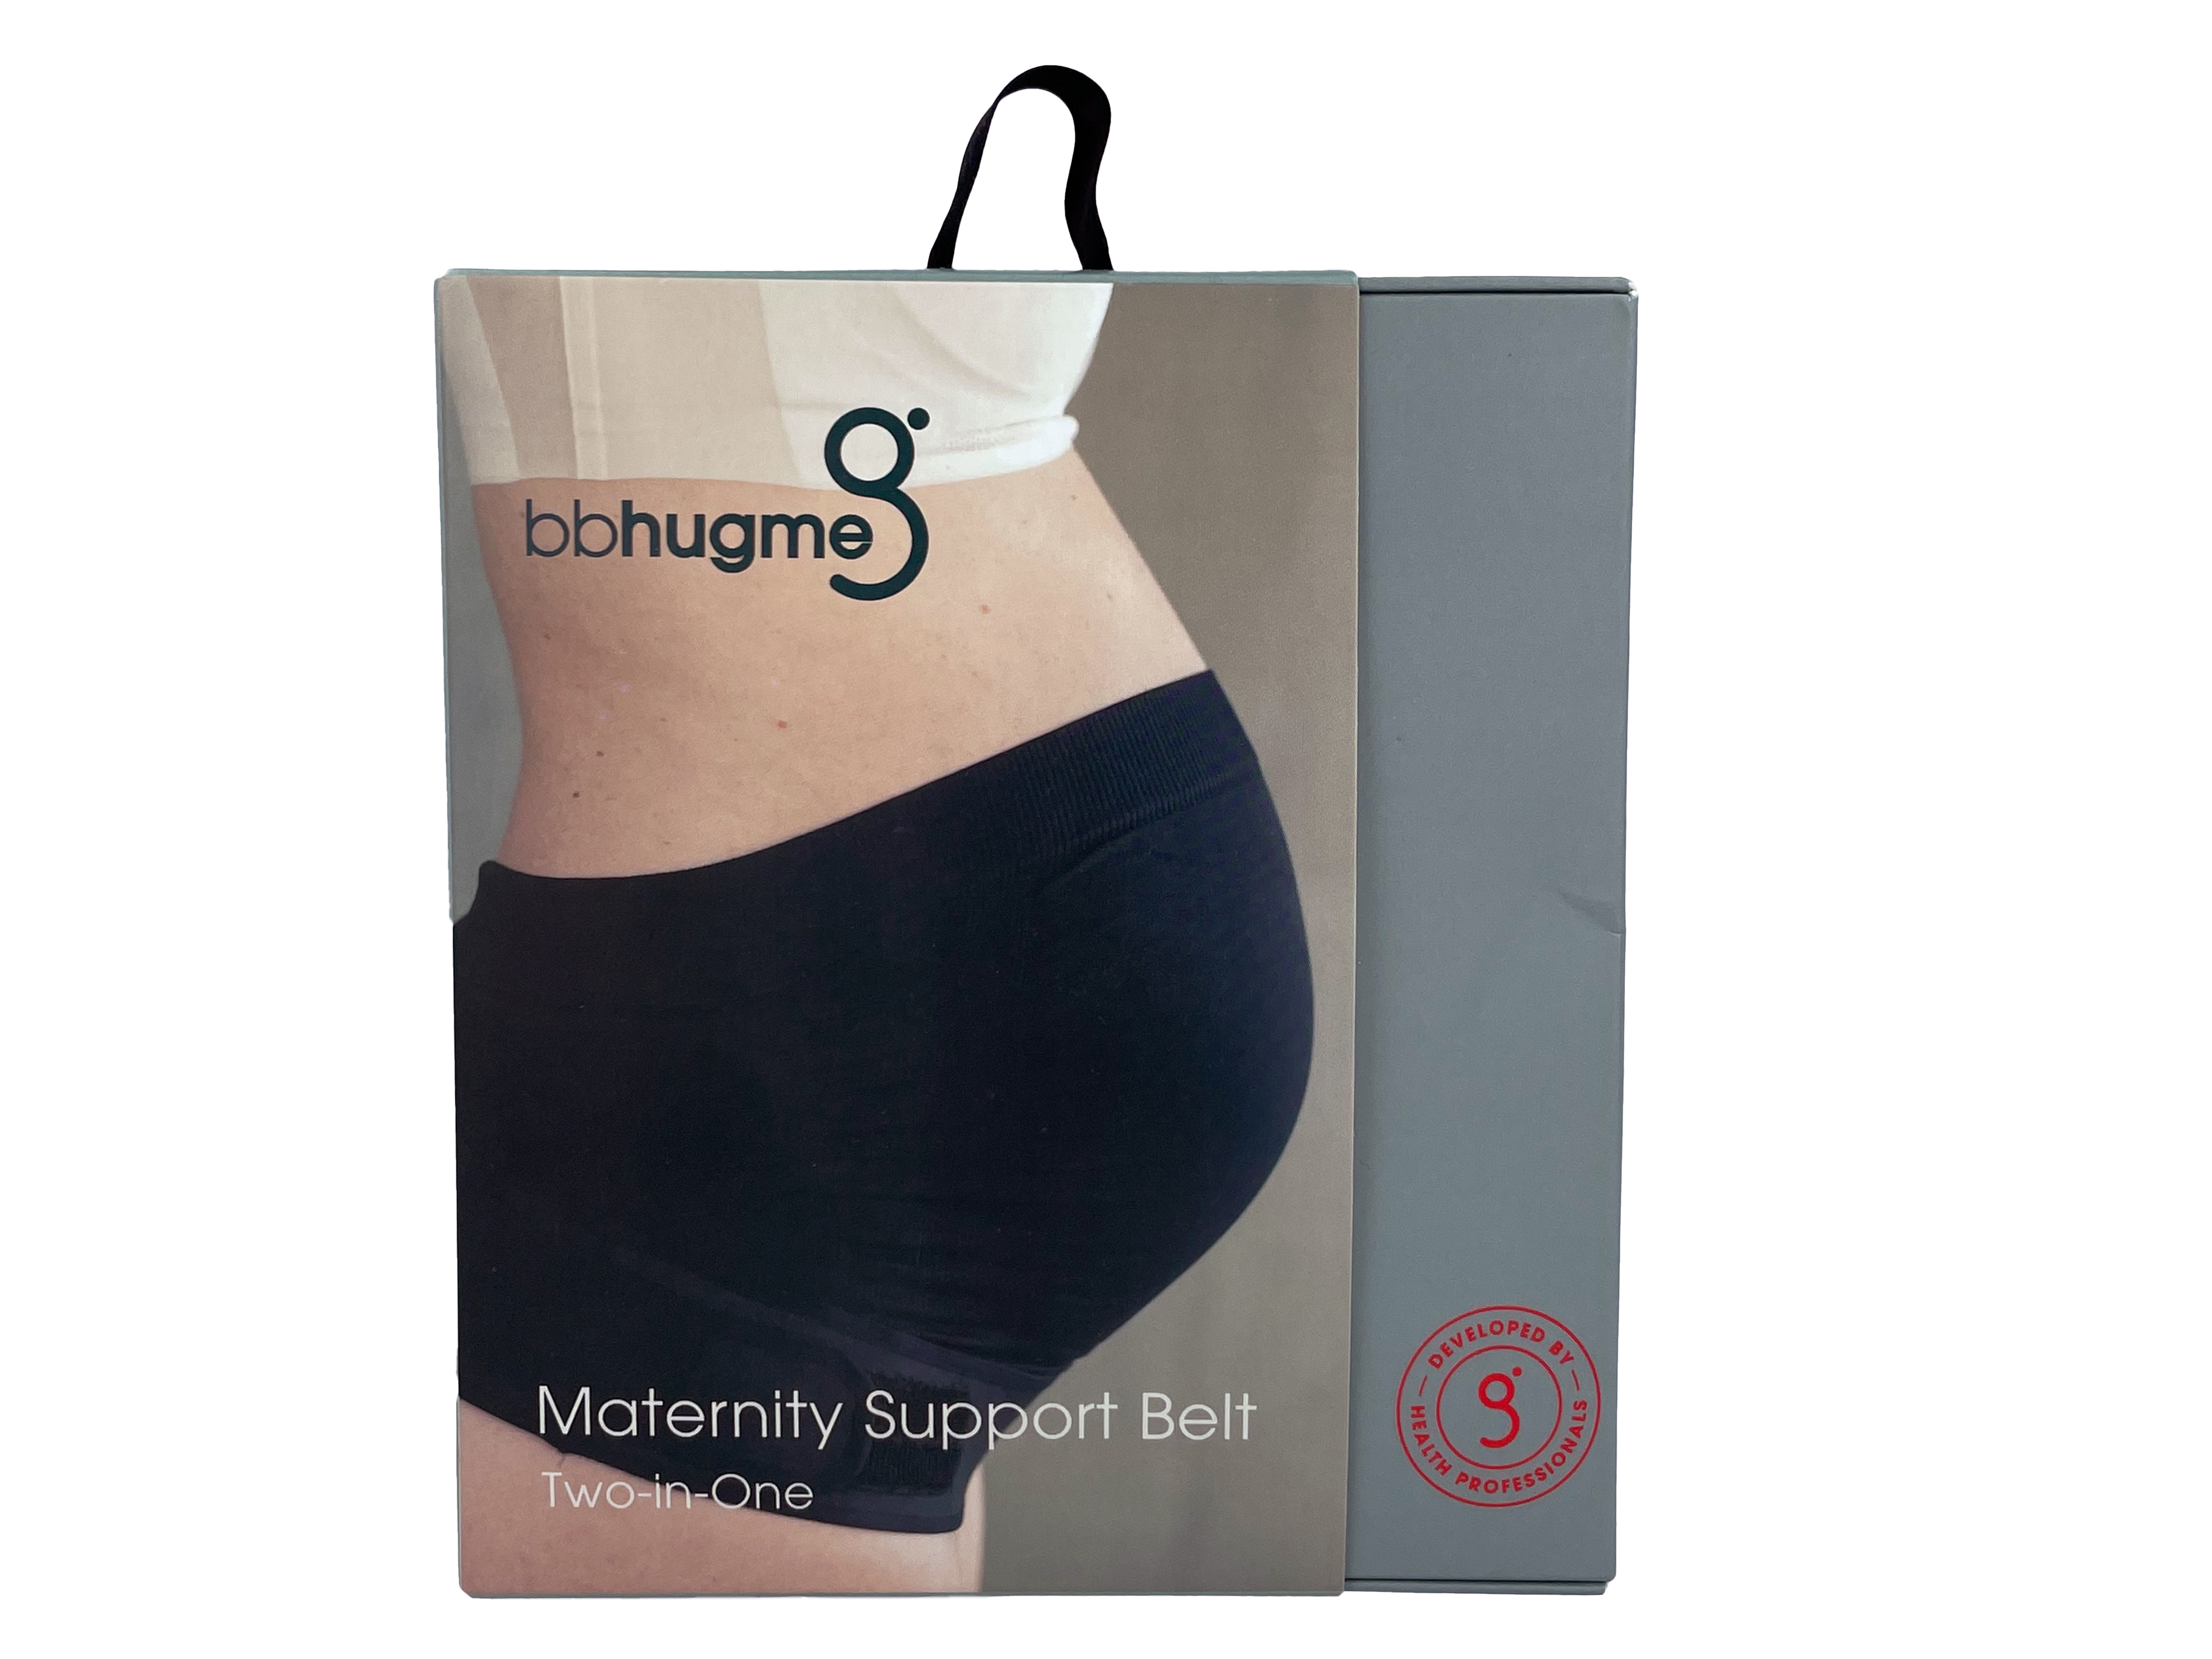 bbhugme Maternity Support Belt Black, XS/S, 1 stk.